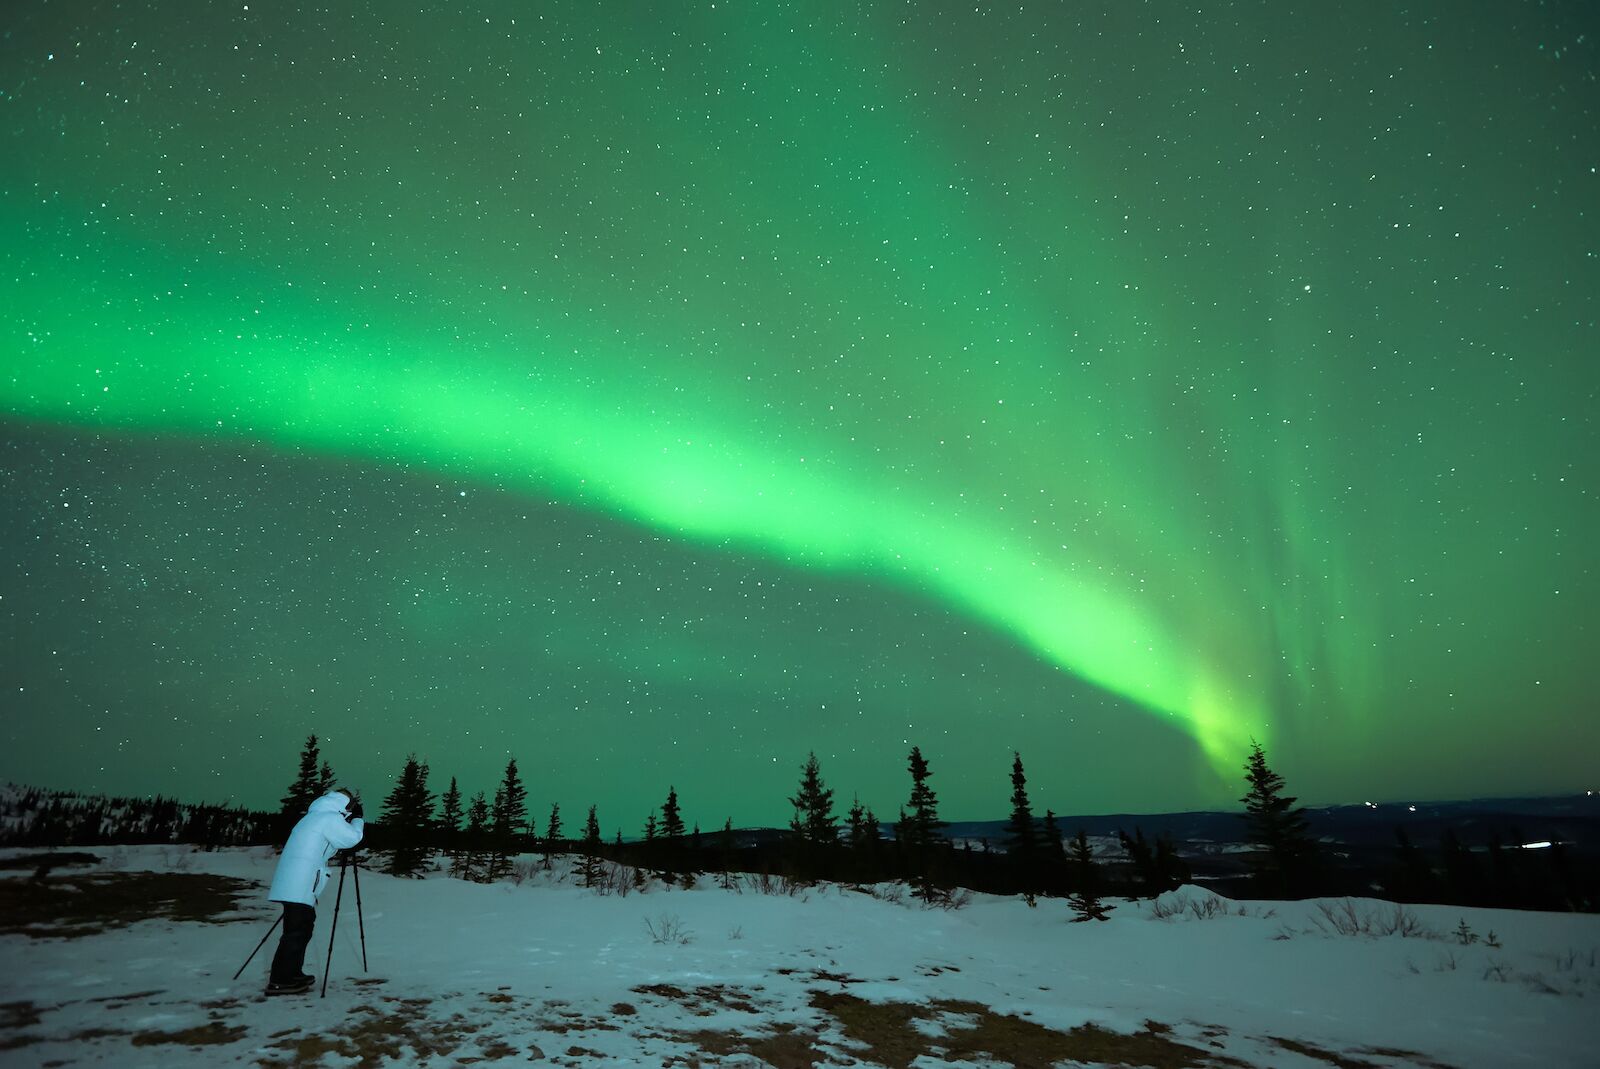 Person Photographing the Aurora Borealis